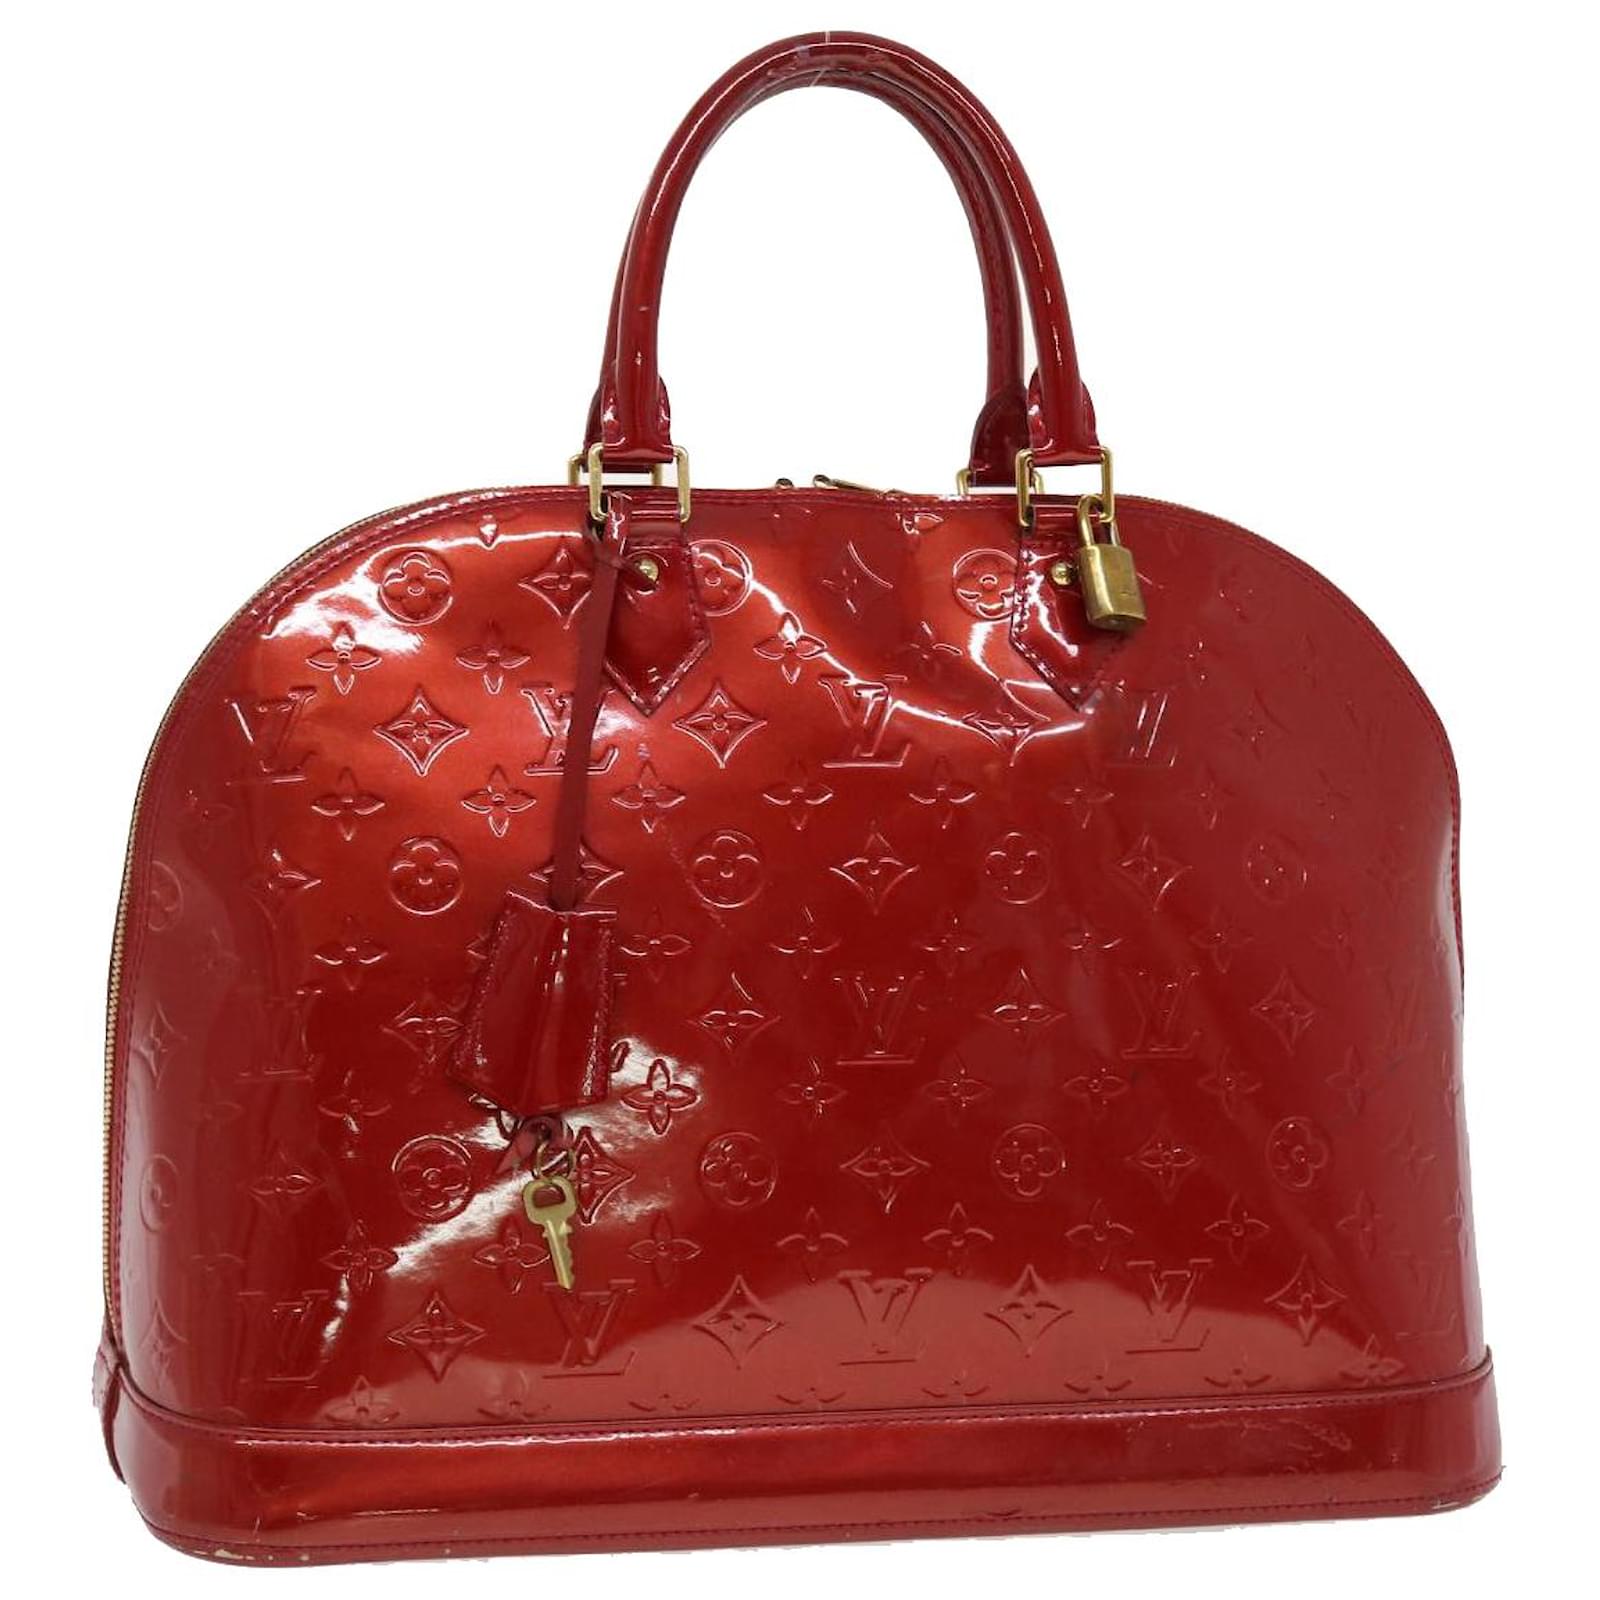 LOUIS VUITTON Pomme d'Amour Red Monogram Vernis Alma GM Bag Great Condition